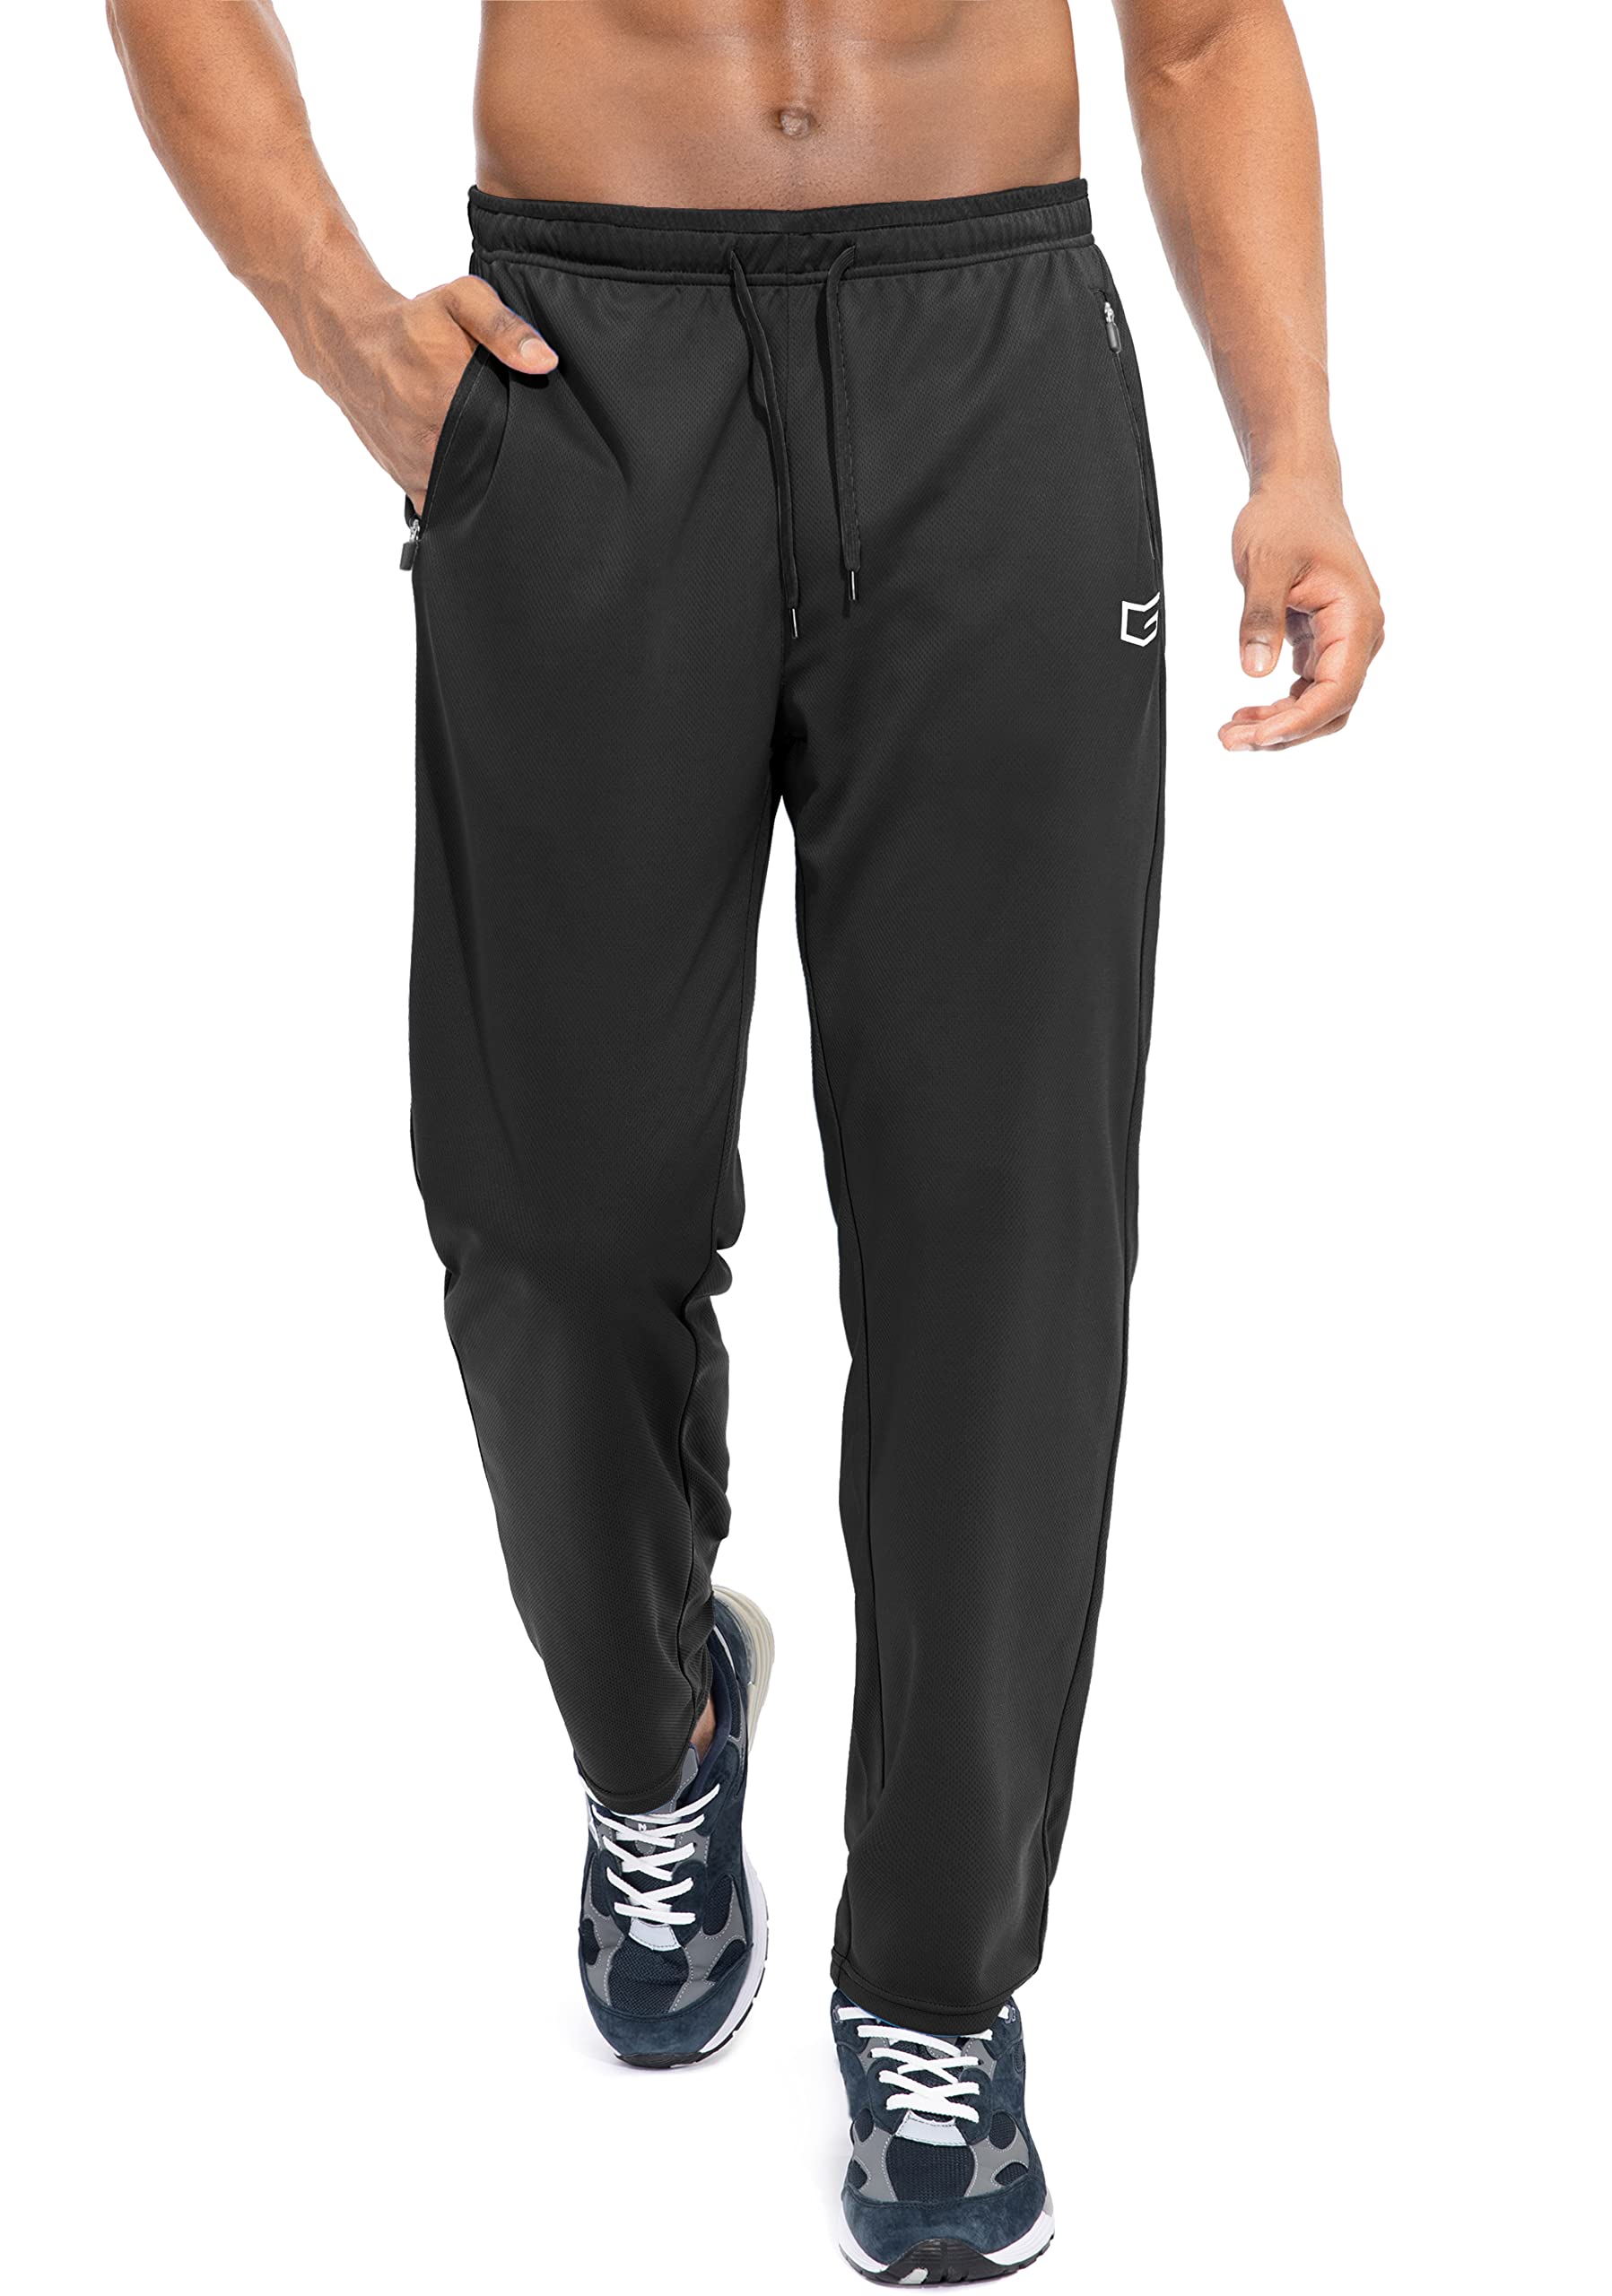 G Gradual Men's Sweatpants with Zipper Pockets Open Bottom Athletic Pants  for Men Workout, Jogging, Running, Lounge 02-black Medium